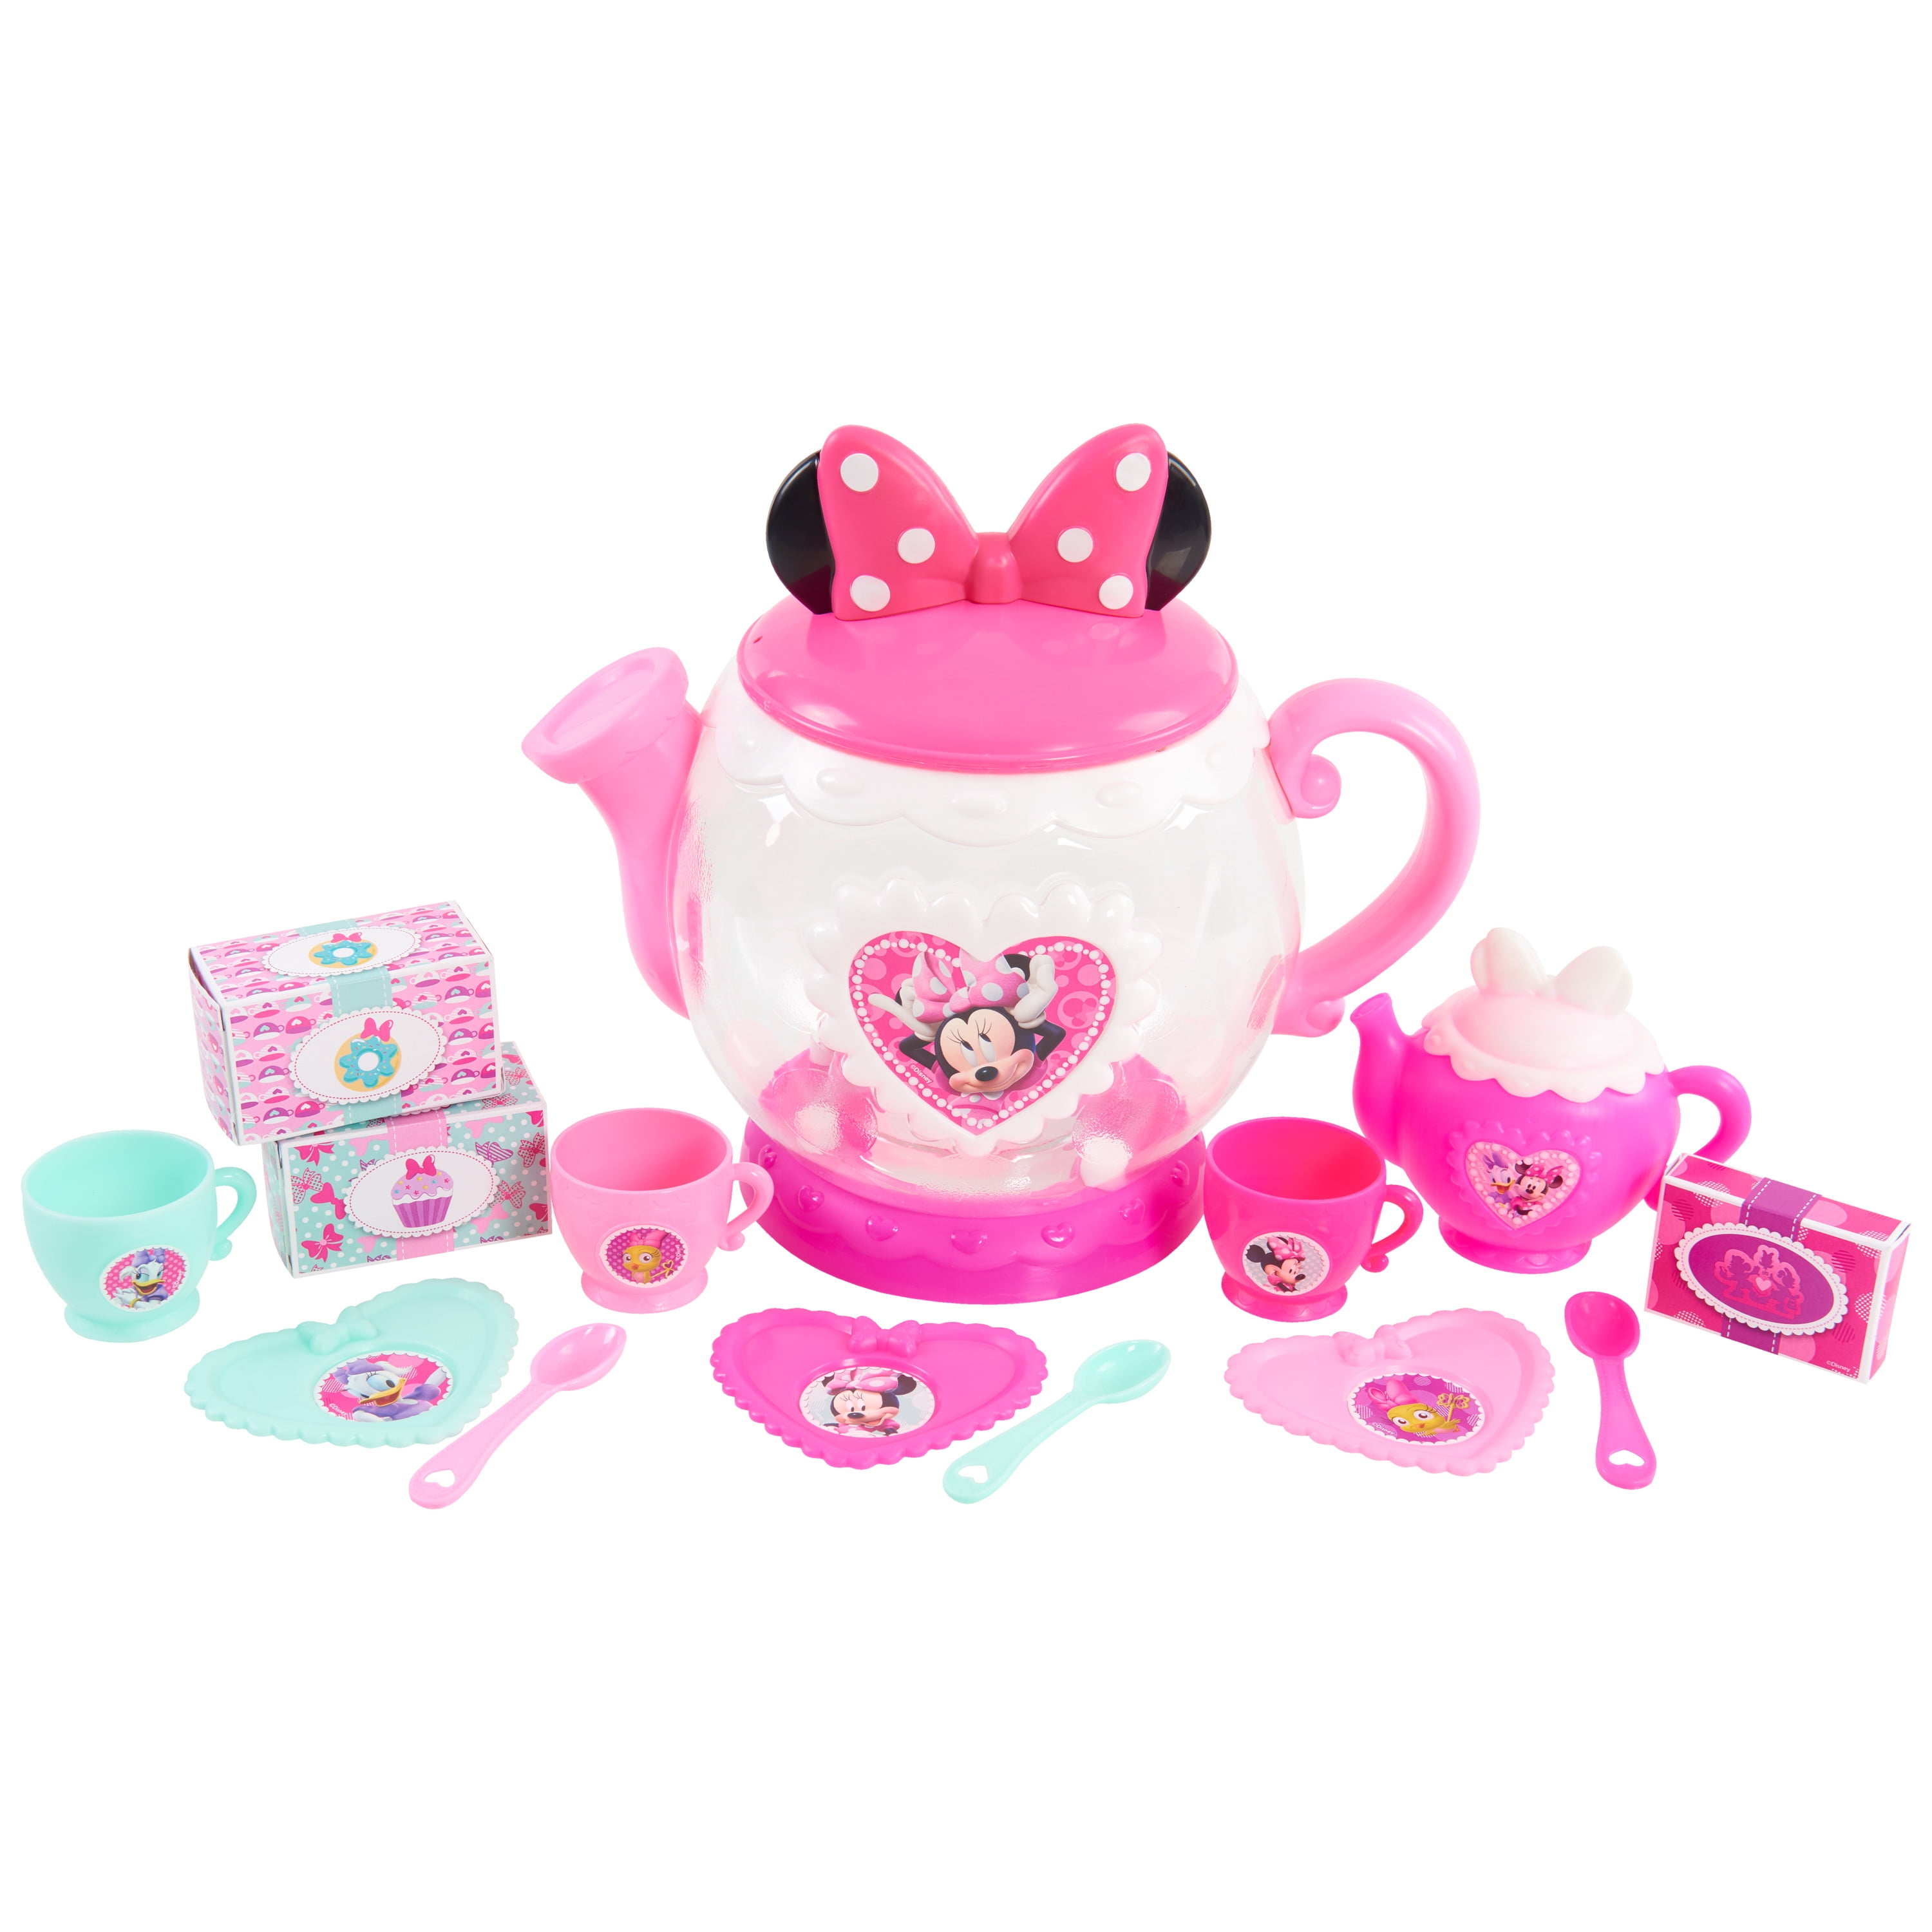 NEW Large Plastic Teapot Toy Tea Set Role Play 19pcs Kids Children XMAS GIFT 